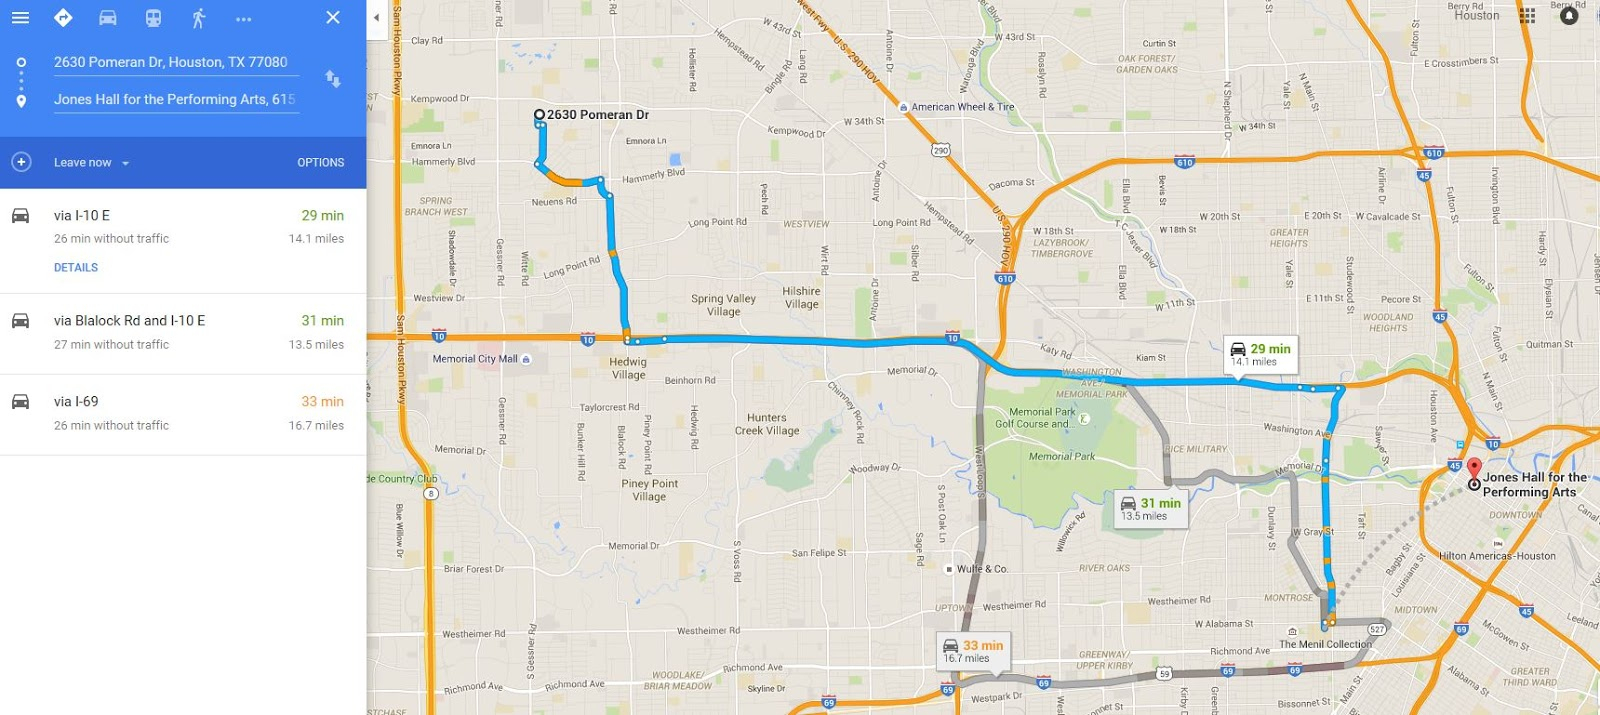 Houston Texas Google Maps | Business Ideas 2013 - Houston Texas Google Maps